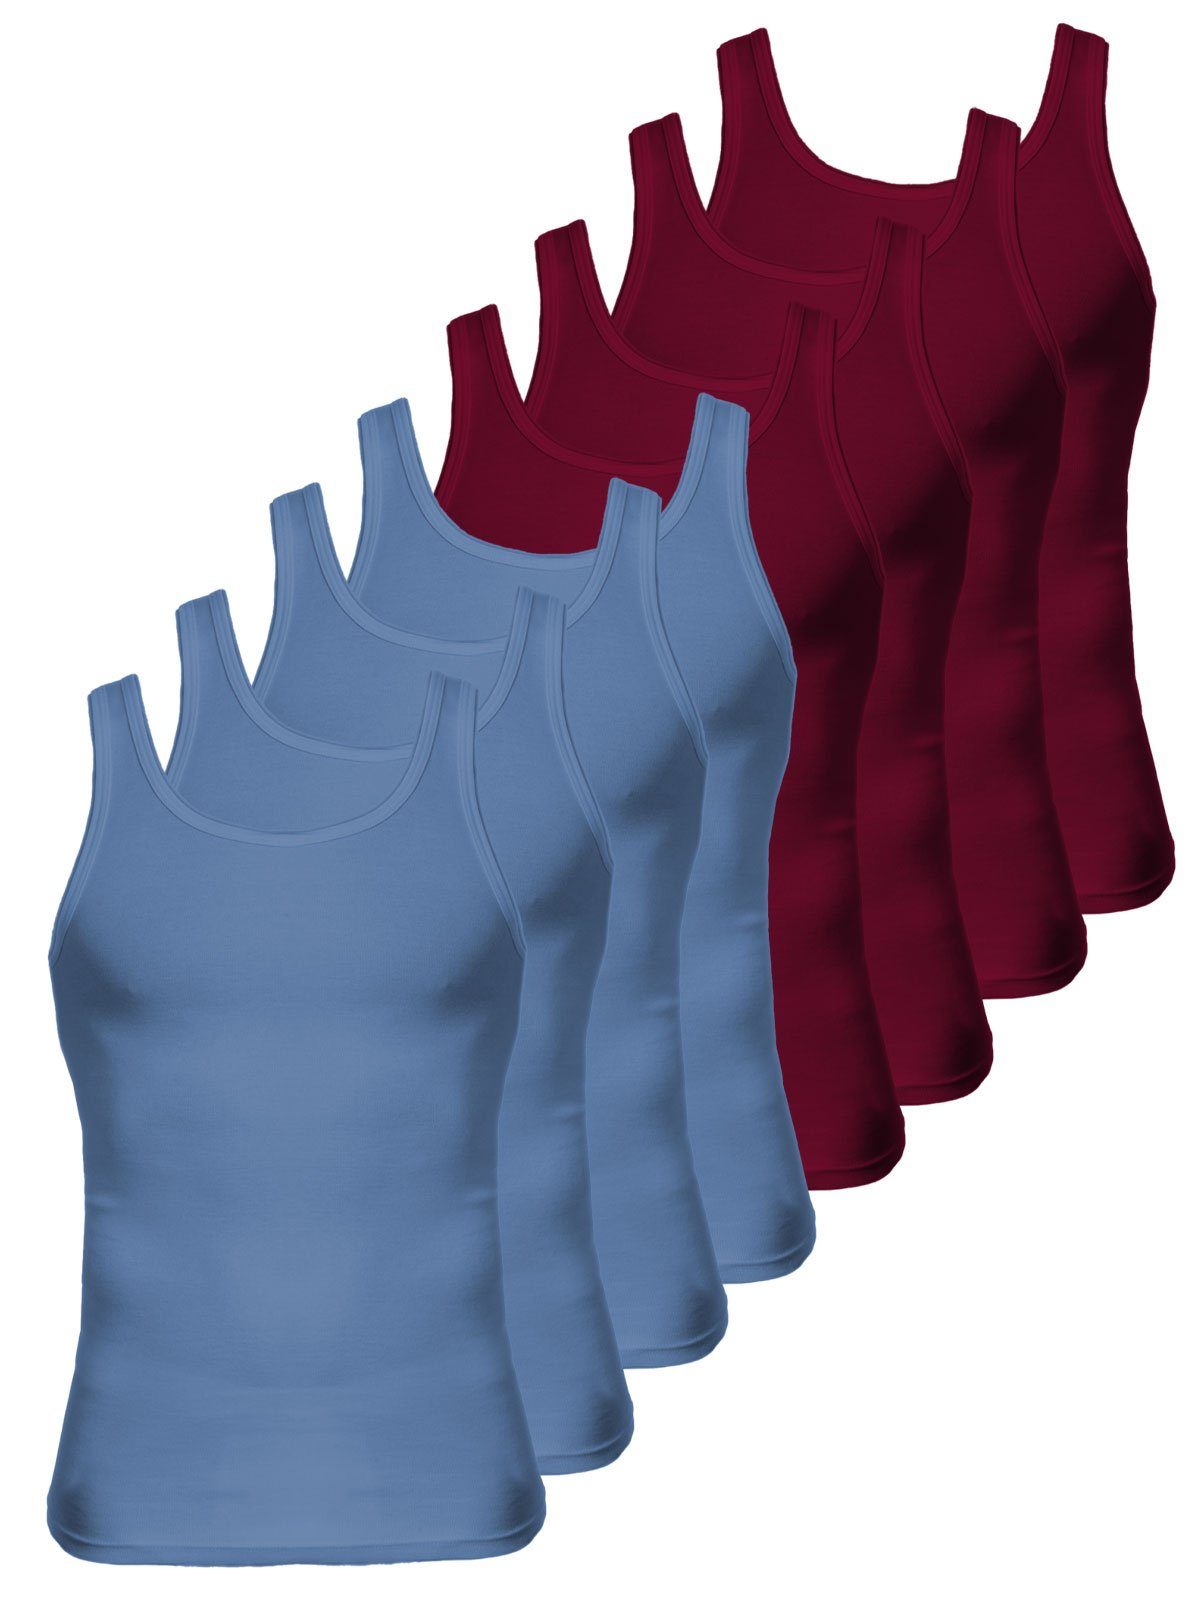 KUMPF Achselhemd 8er Sparpack Herren Unterhemd Bio Cotton (Spar-Set, 8-St) - rubin atlantis